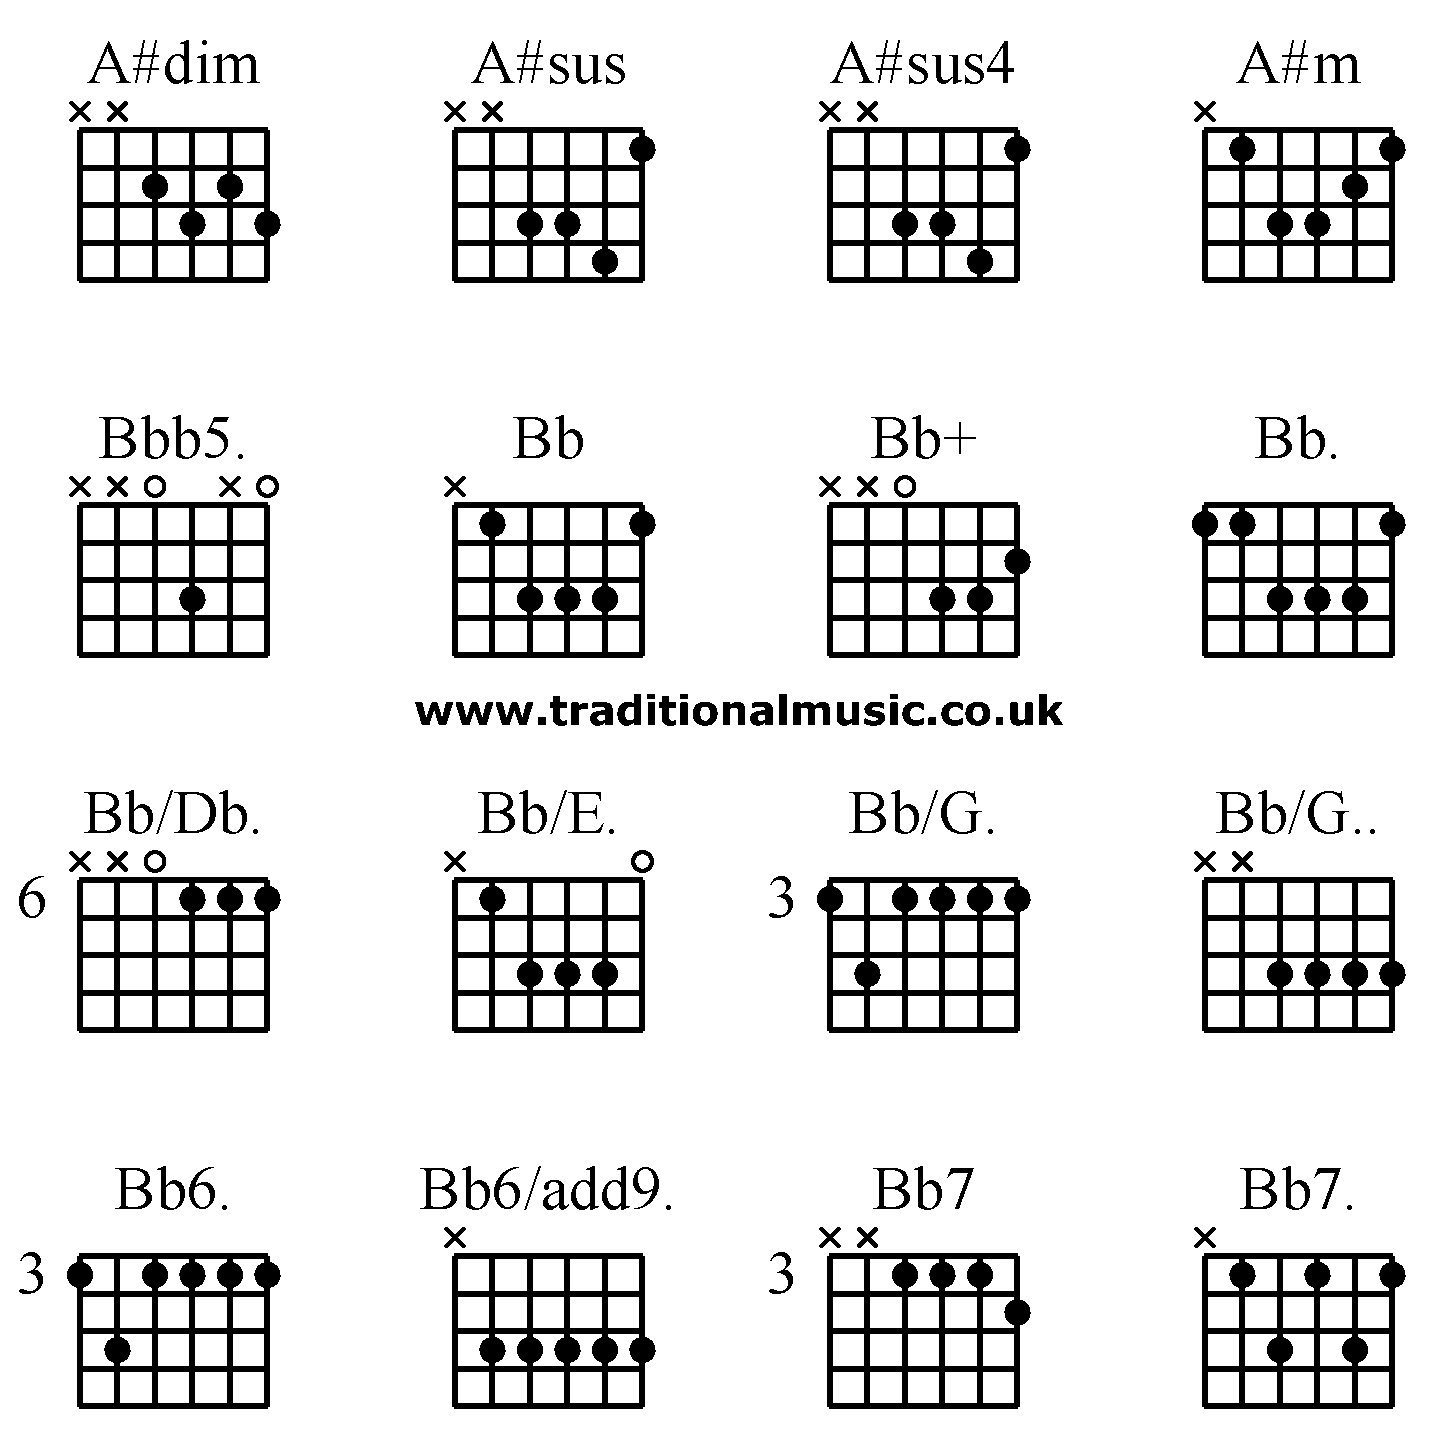 Advanced guitar chords:A#dim A#sus A#sus4 A#m, Bbb5. Bb Bb+ Bb. Bb/Db. Bb/E. Bb/G. Bb/G.. Bb6. Bb6/add9. Bb7 Bb7.